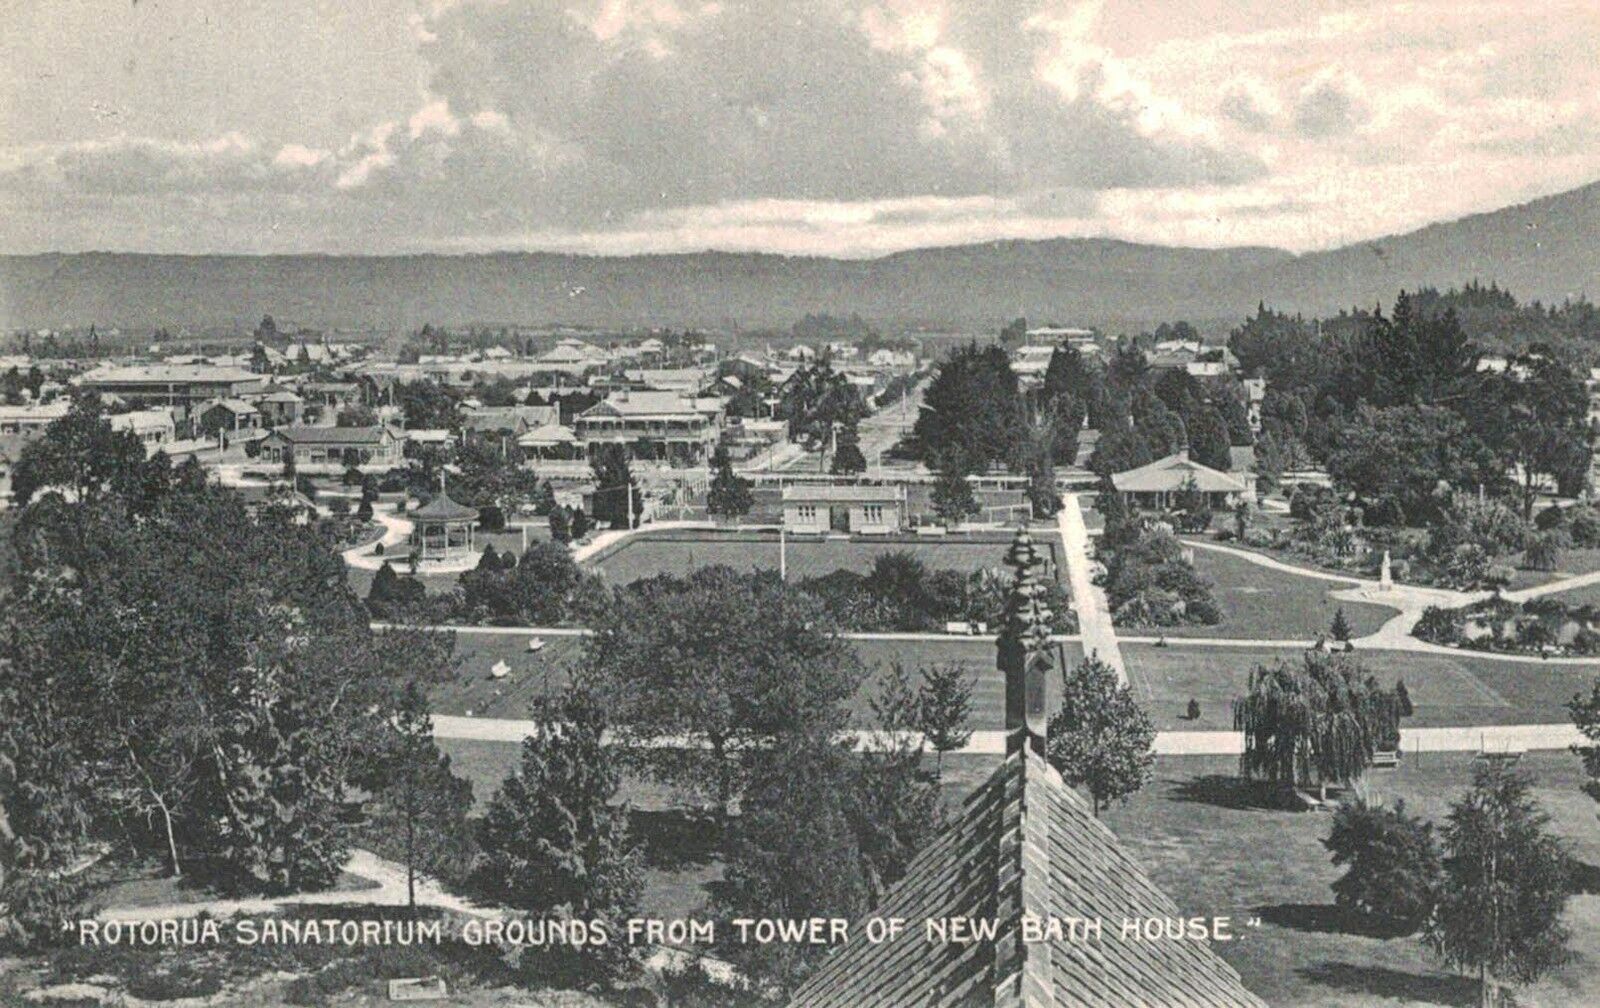 Rotorua,New Zealand,Sanitarium,View from Tower of the New Bath House c.1909